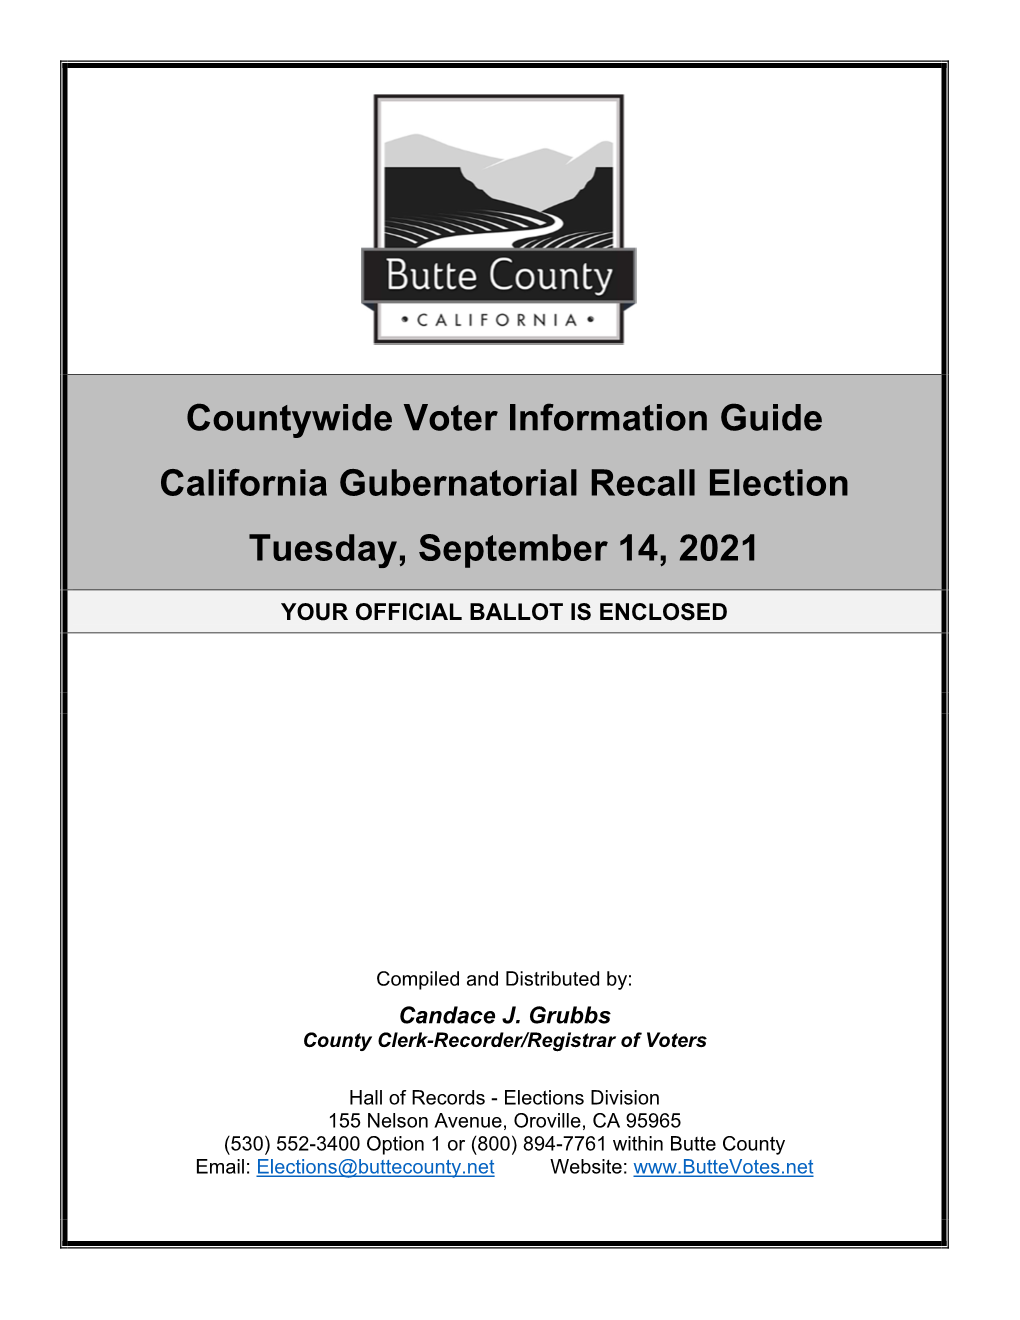 Countywide Voter Information Guide California Gubernatorial Recall